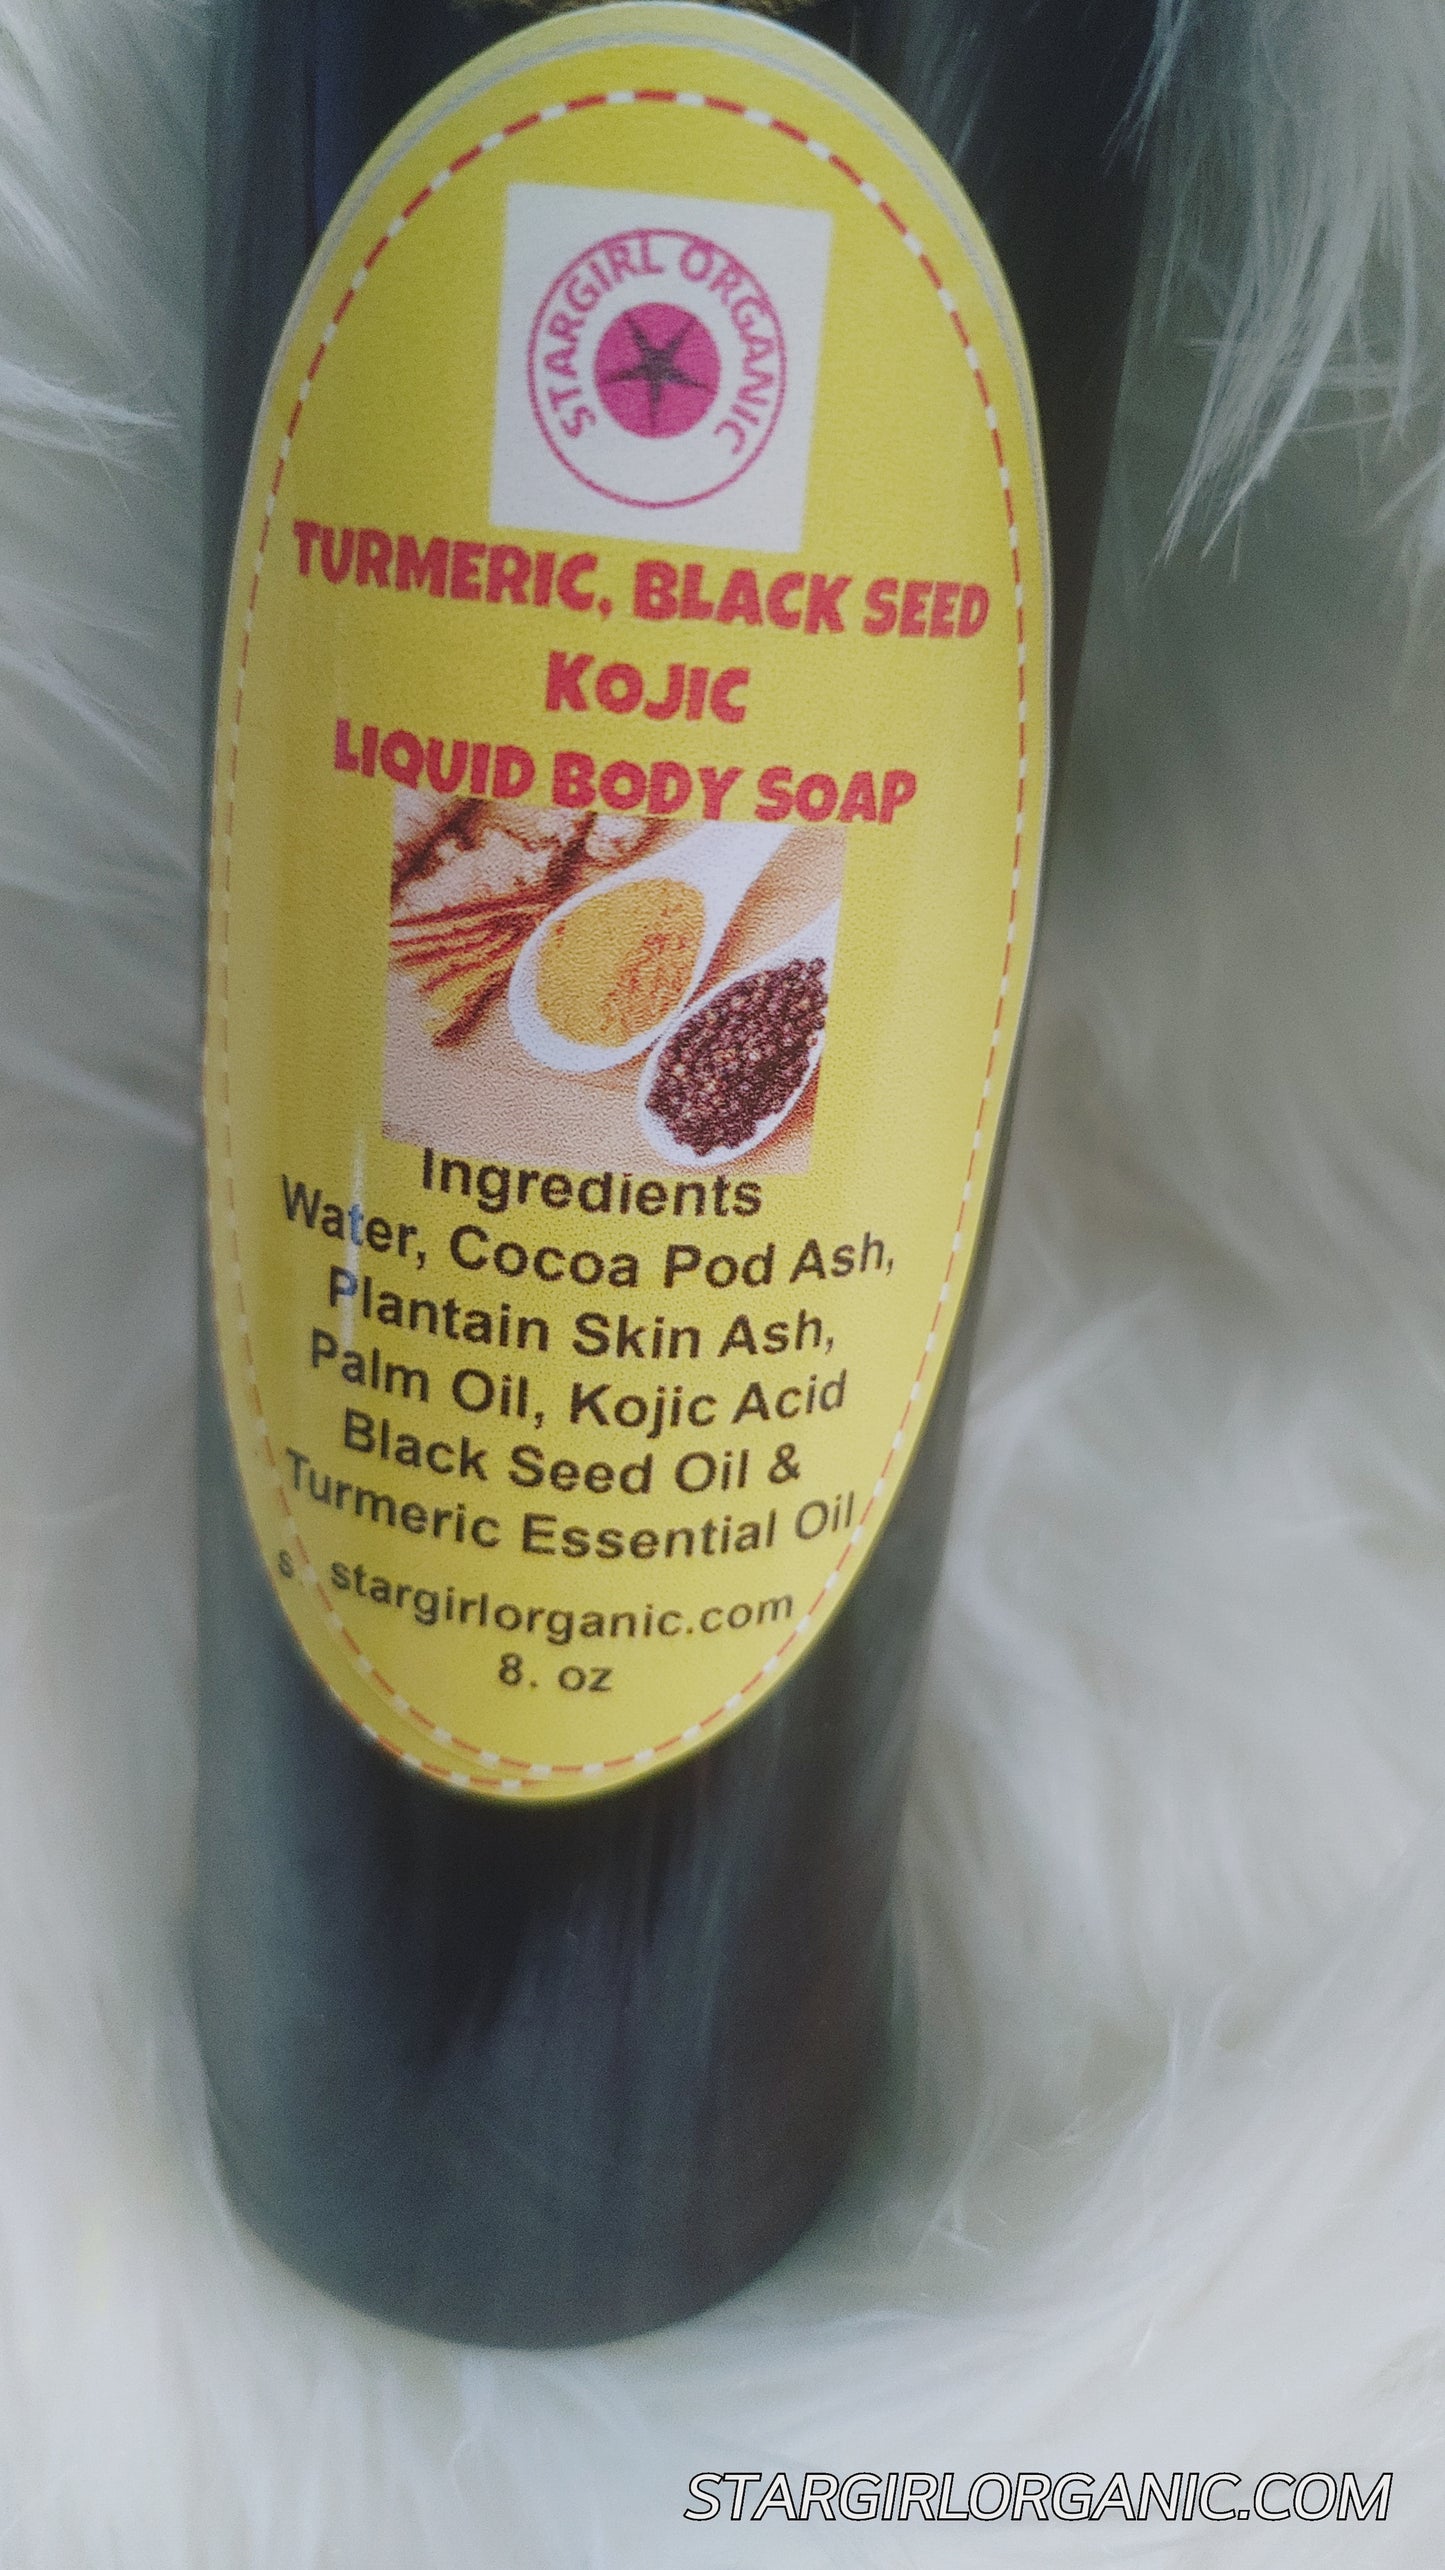 Turmeric Black Seed and Kojic Body Soap